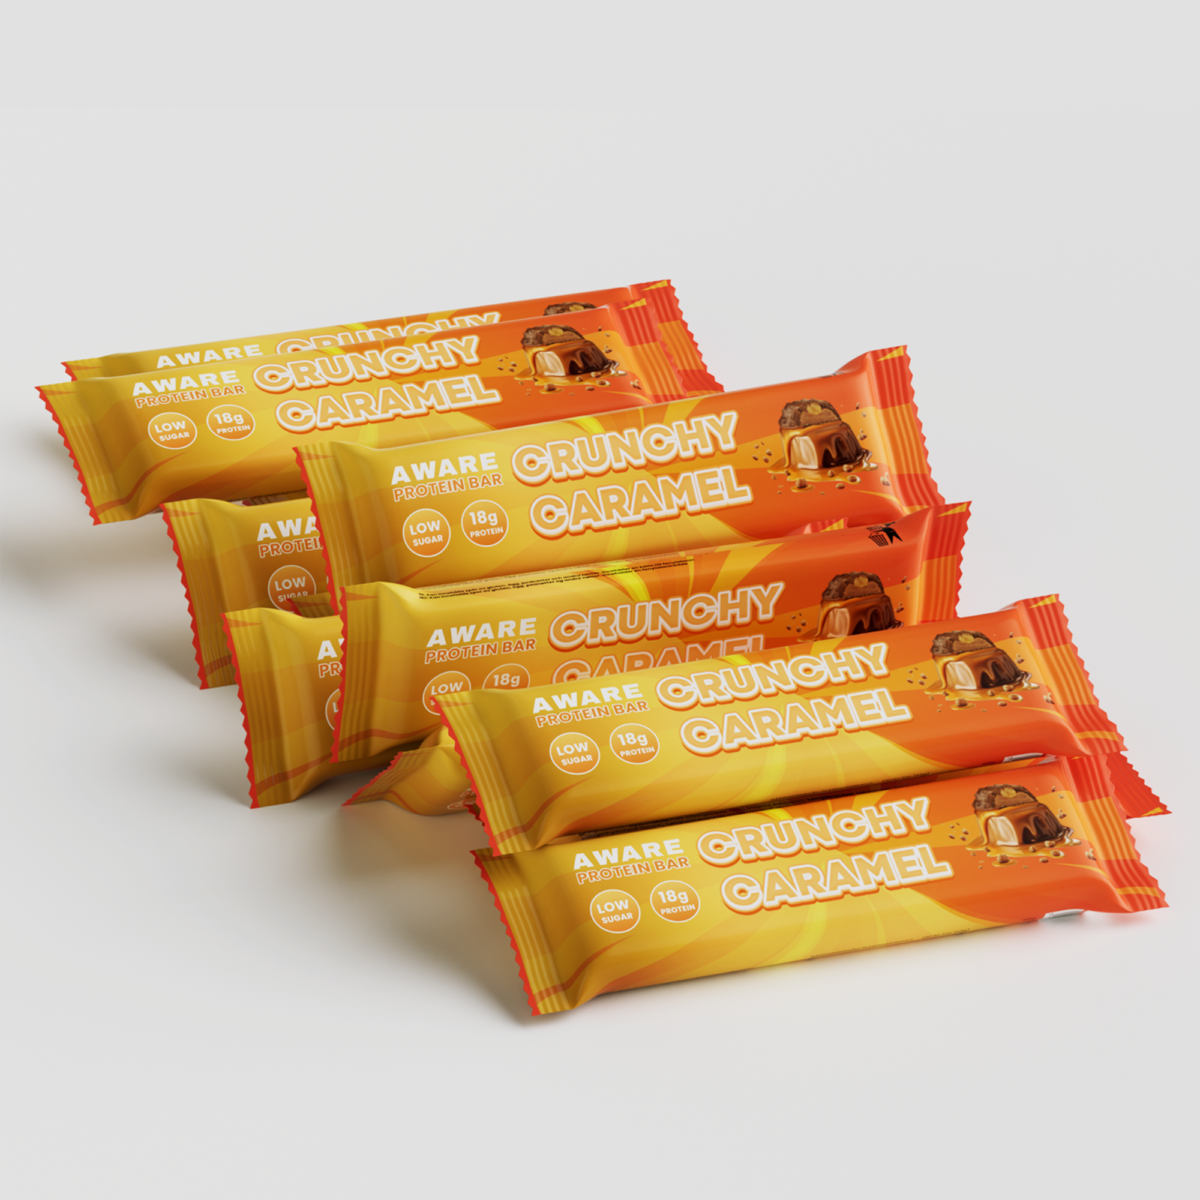 AWARE Protein Bar Crunchy Caramel 12 pack